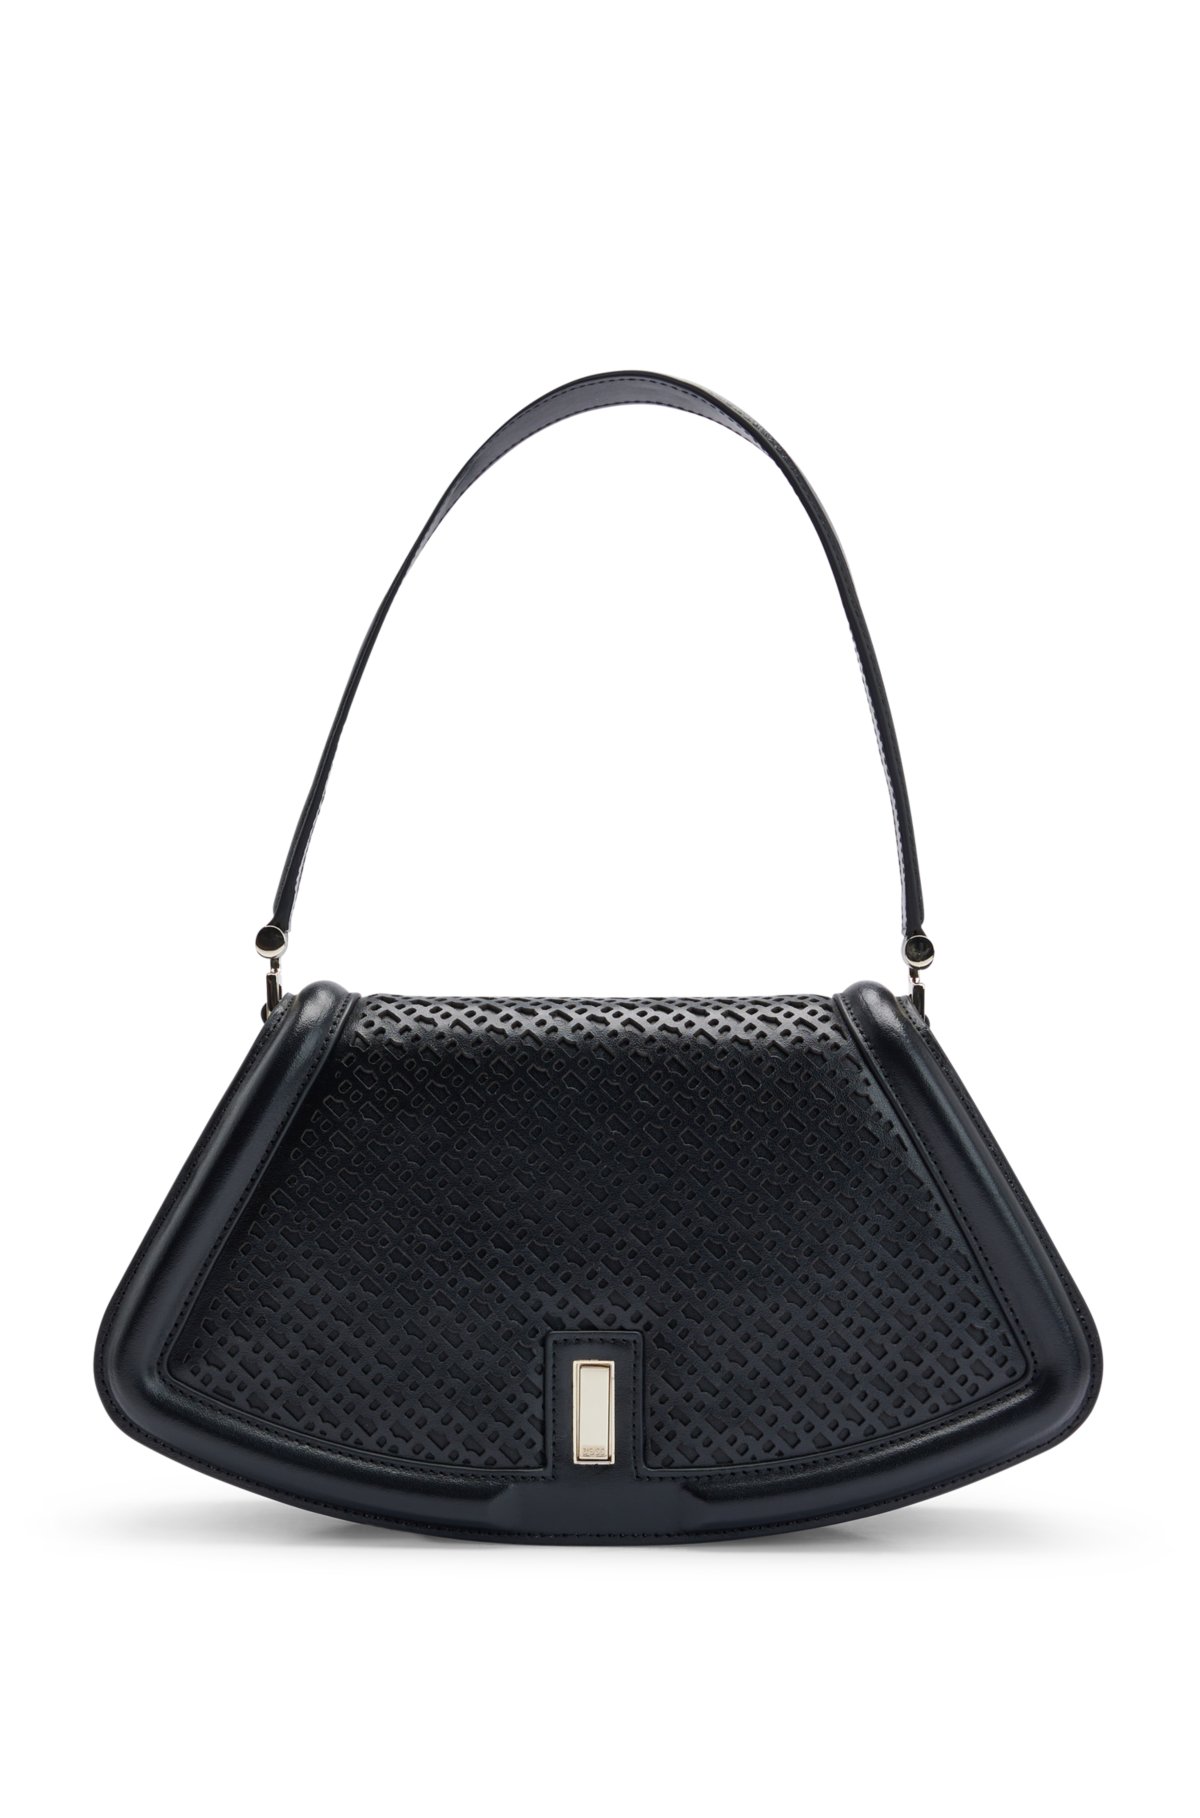 Versace, Bags, Versace Parfums Fragrance Luxury Shopping Tote Bag Purse  Black Detachabl